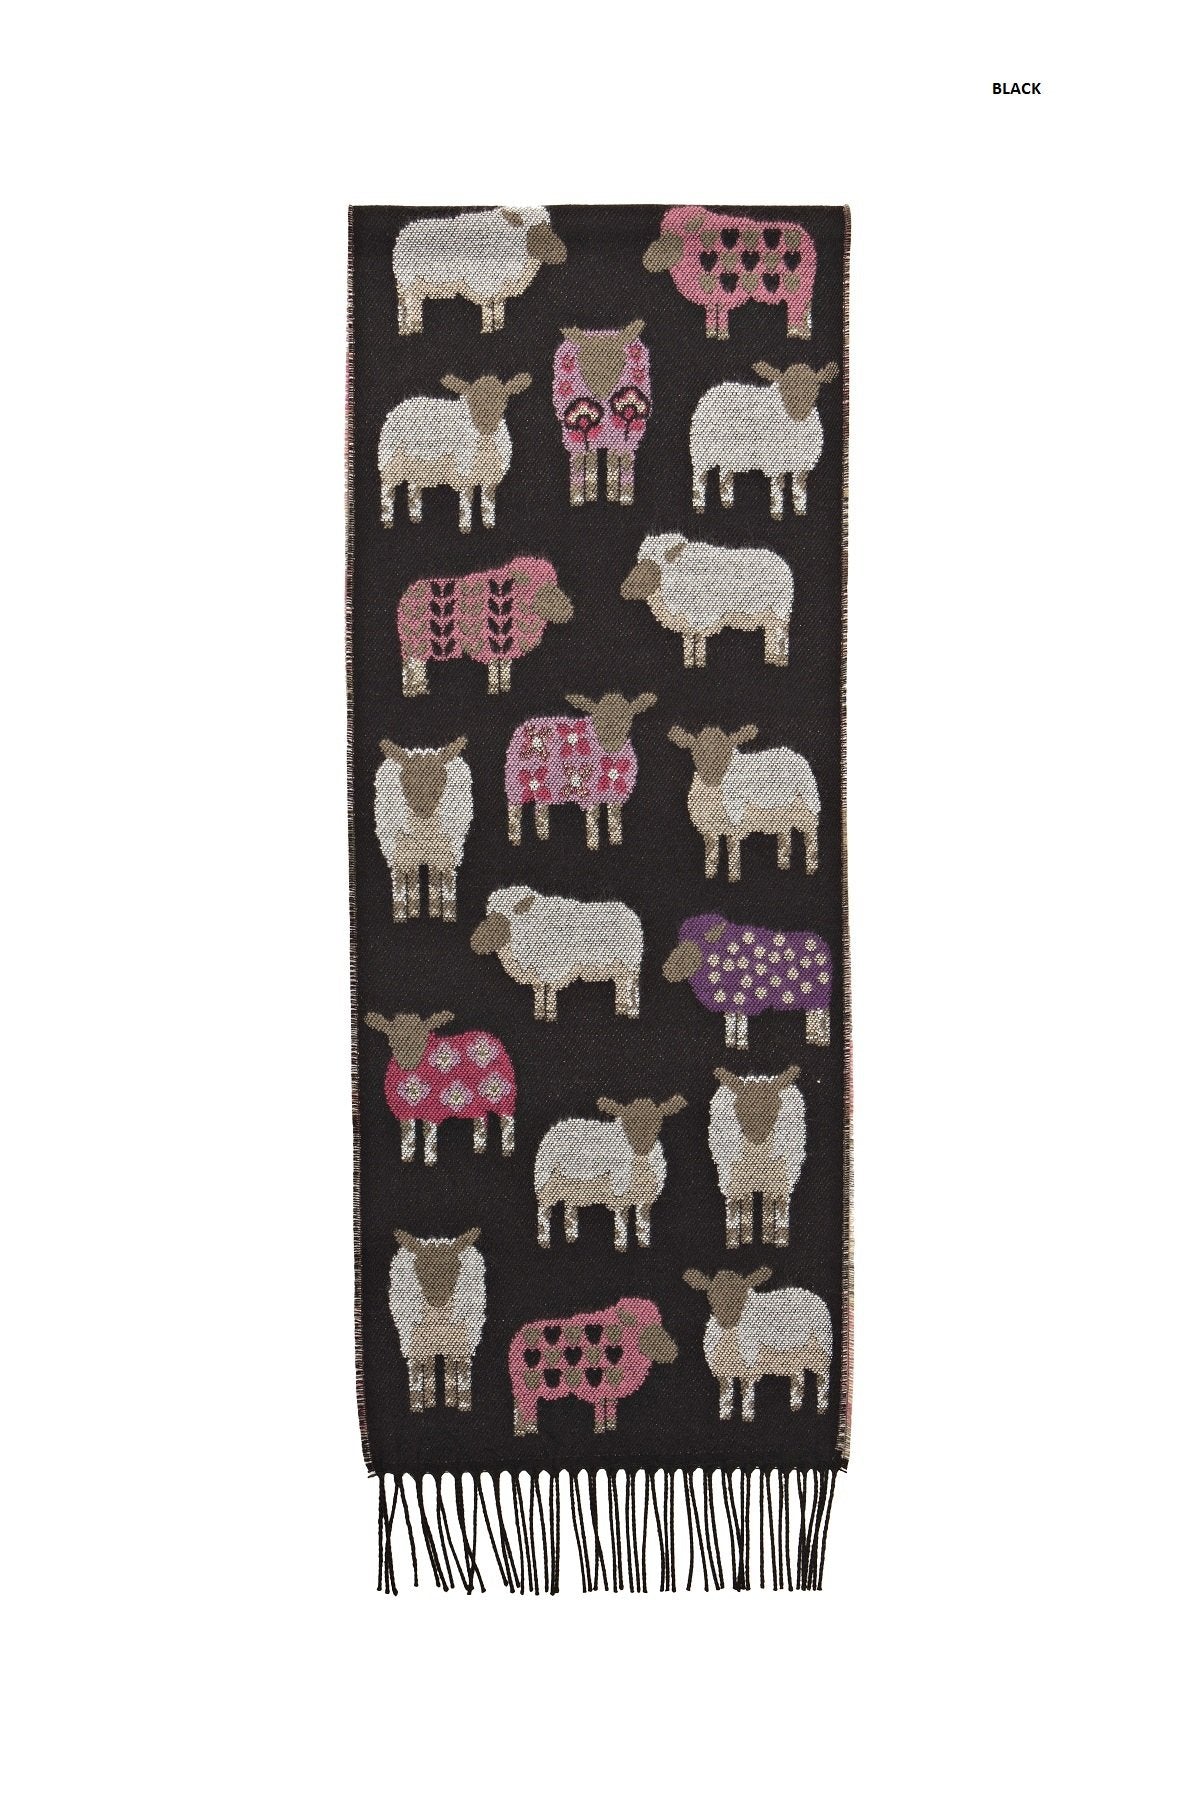 Black scarf with multiple sheep design motif by Jimmy Hourihan, Dublin, Ireland